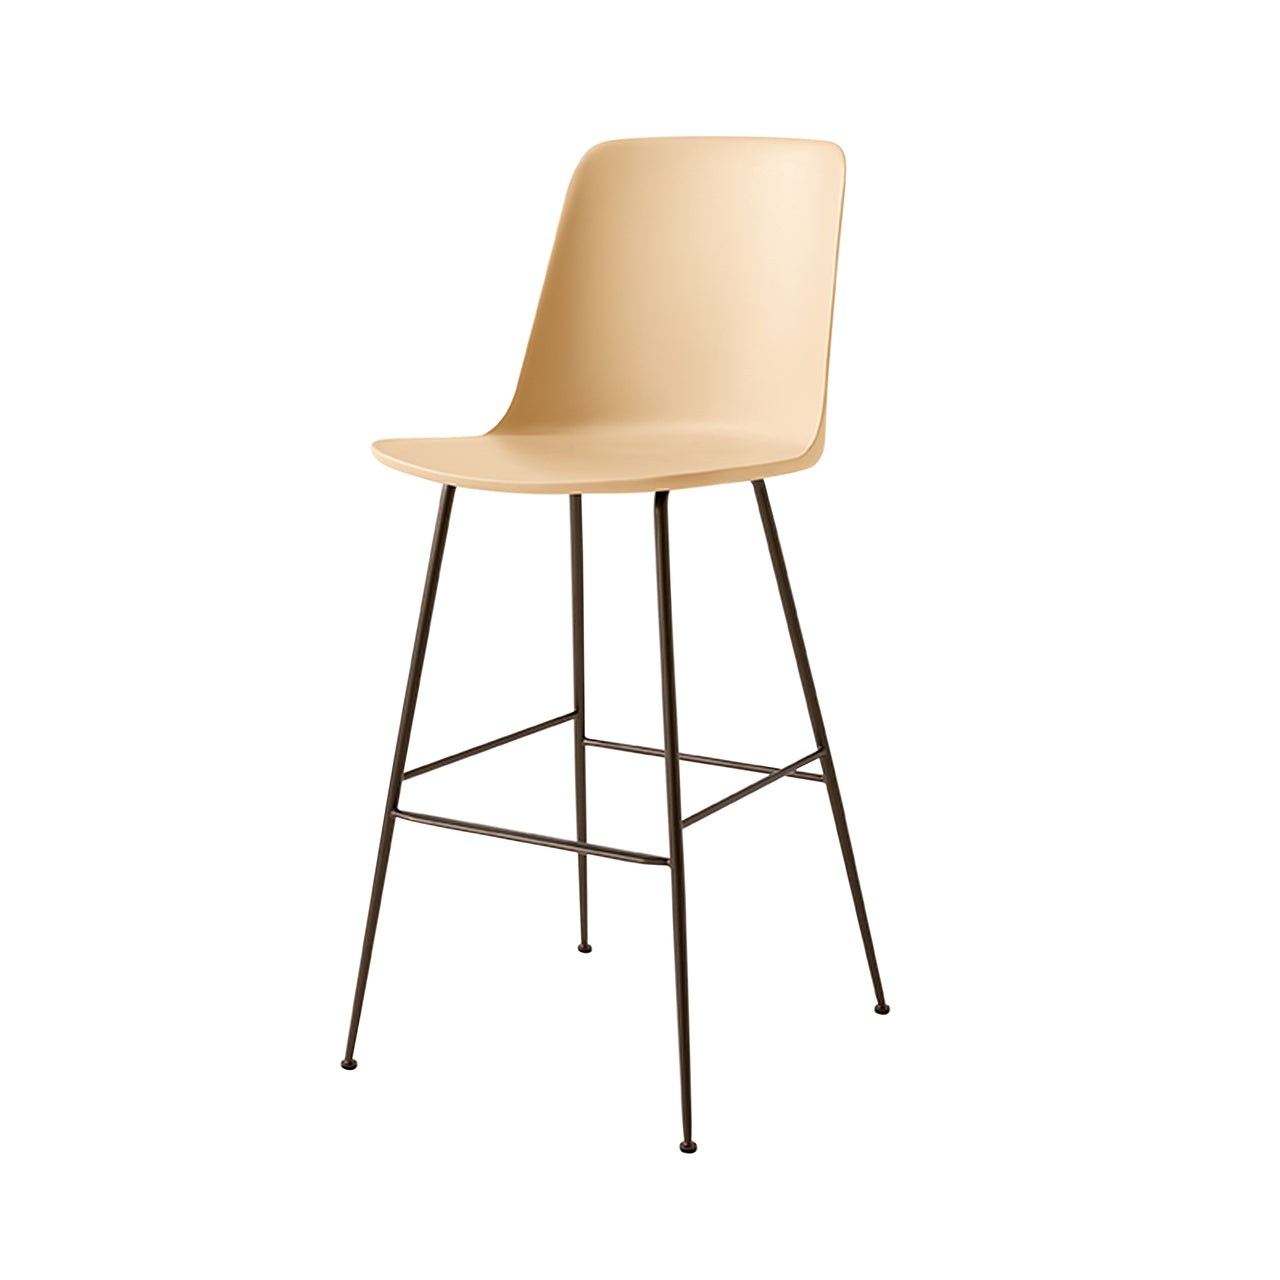 Rely Bar + Counter Highback Chair: HW91 + HW96 + Bar (HW96) + Beige Sand + Bronzed